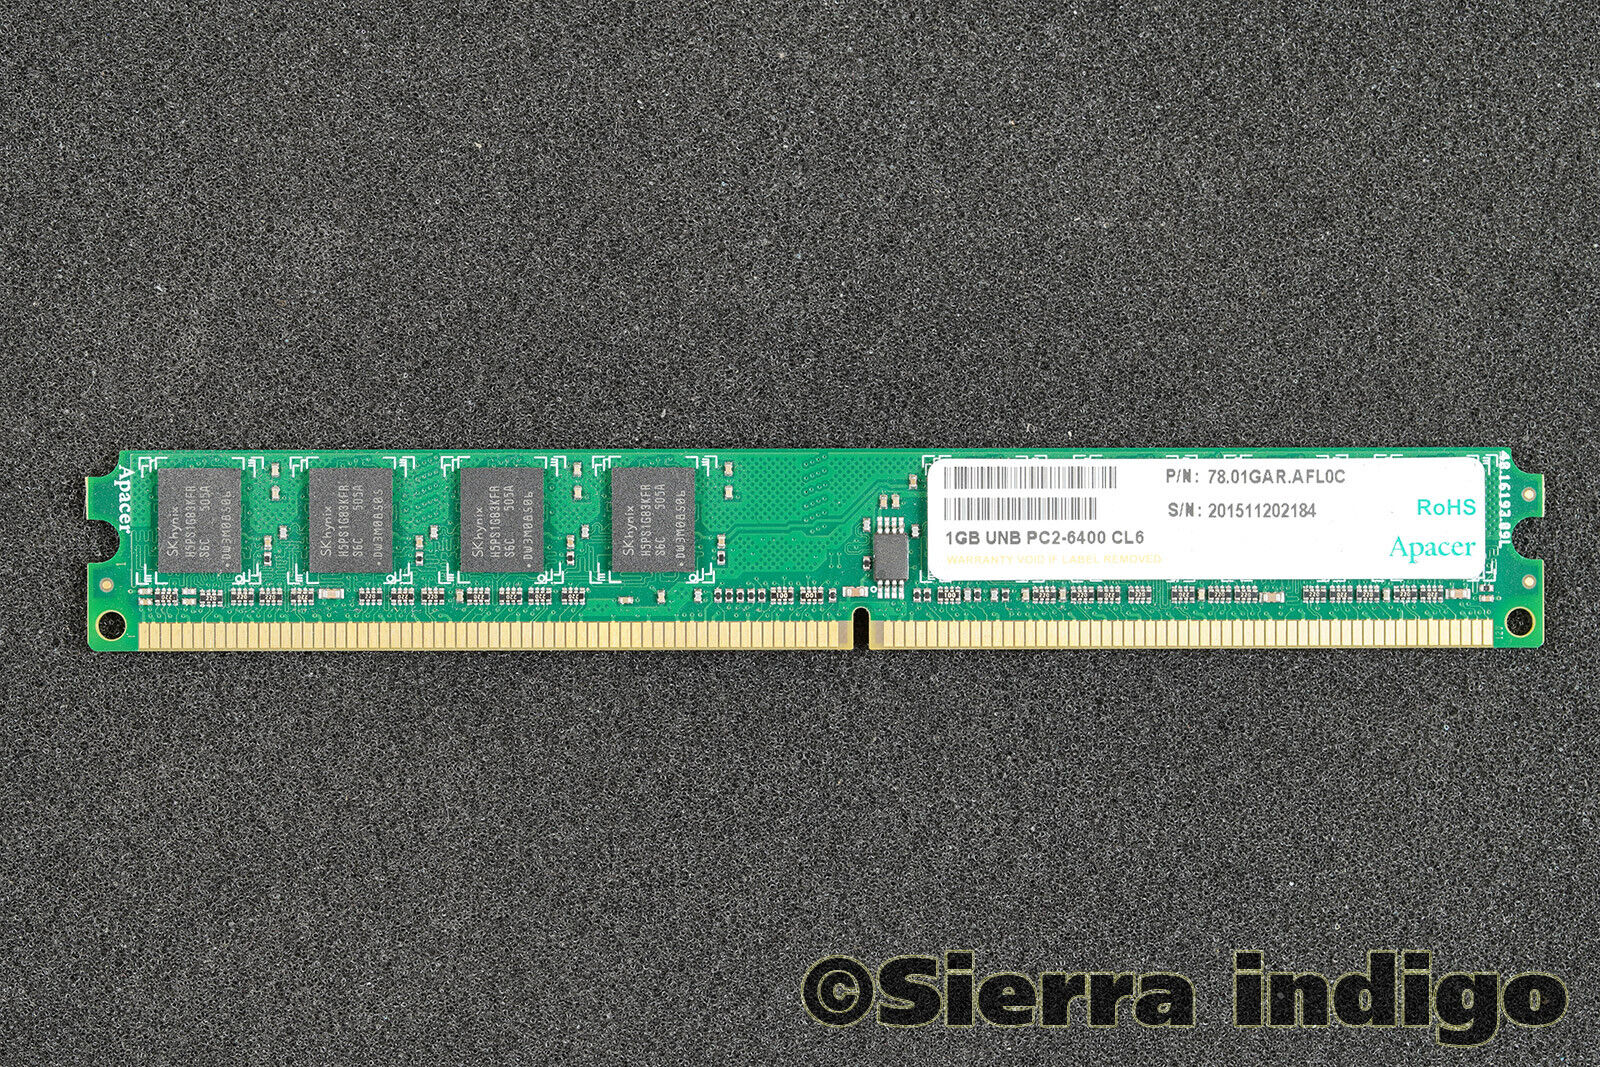 Apacer 78.01GAR.AFL0C 1GB UNB PC2-6400 CL6 Low Profile Memory RAM